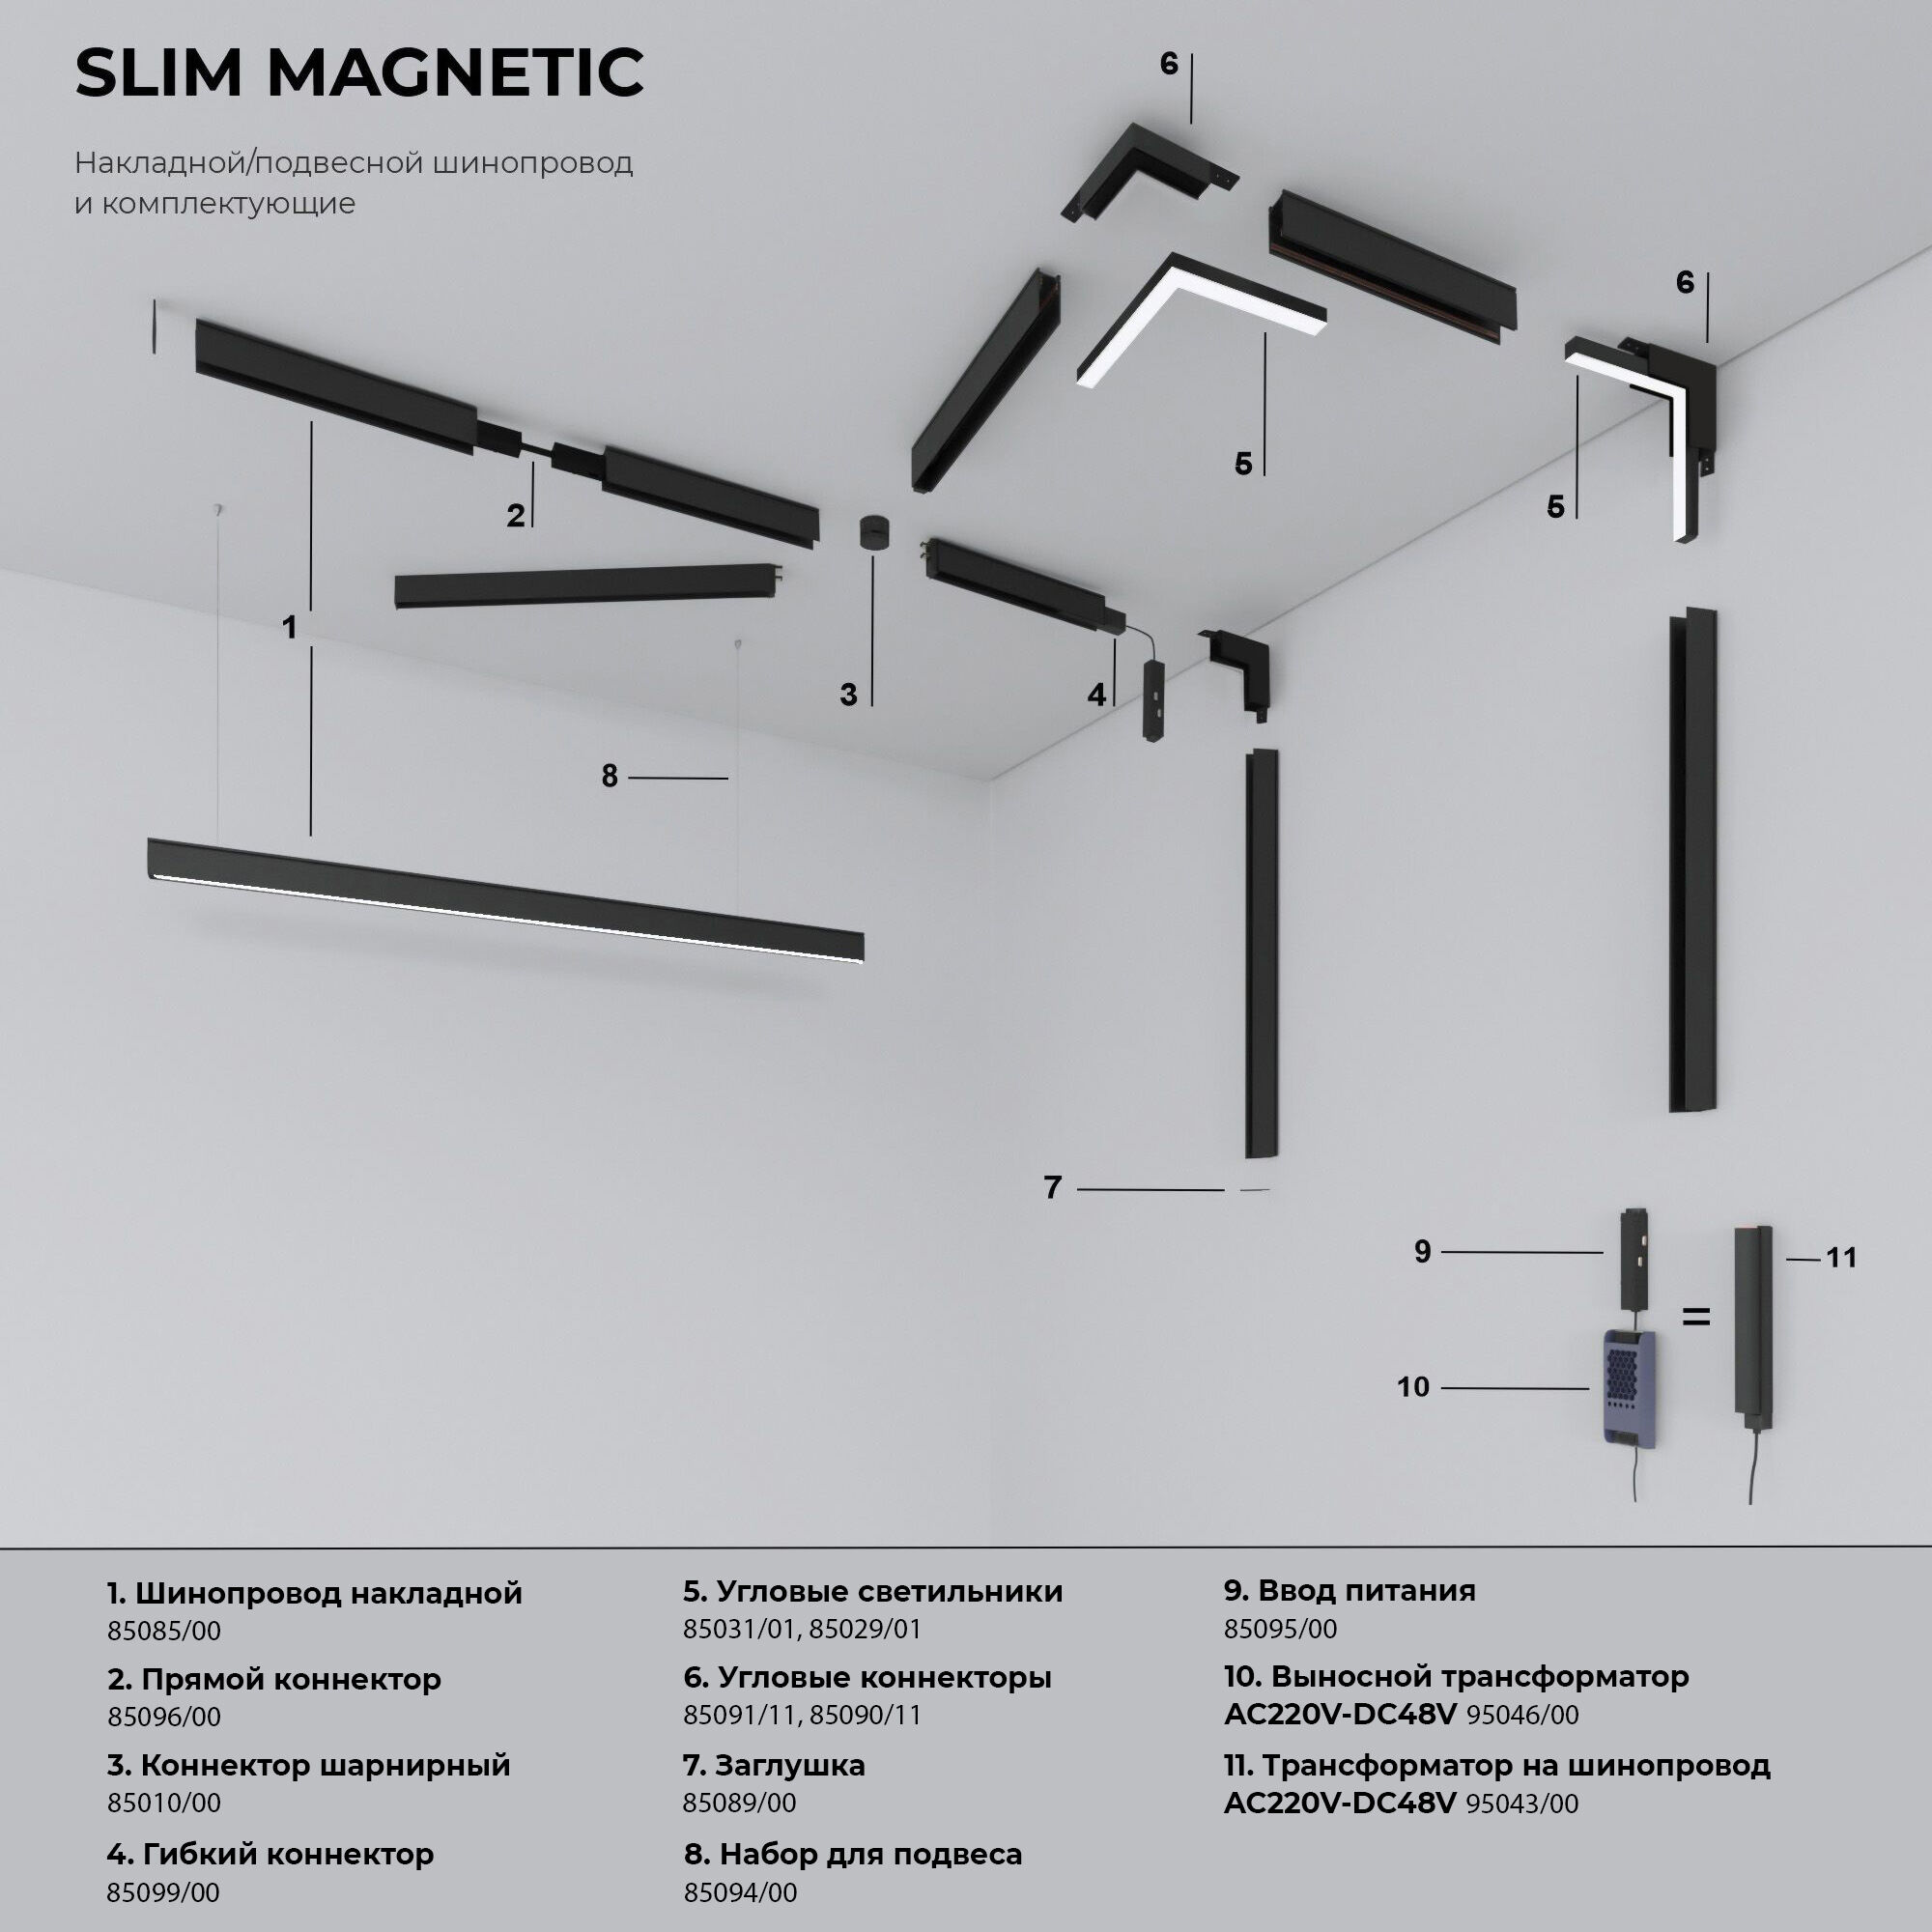 Slim Magnetic Гибкий коннектор белый 85099/00